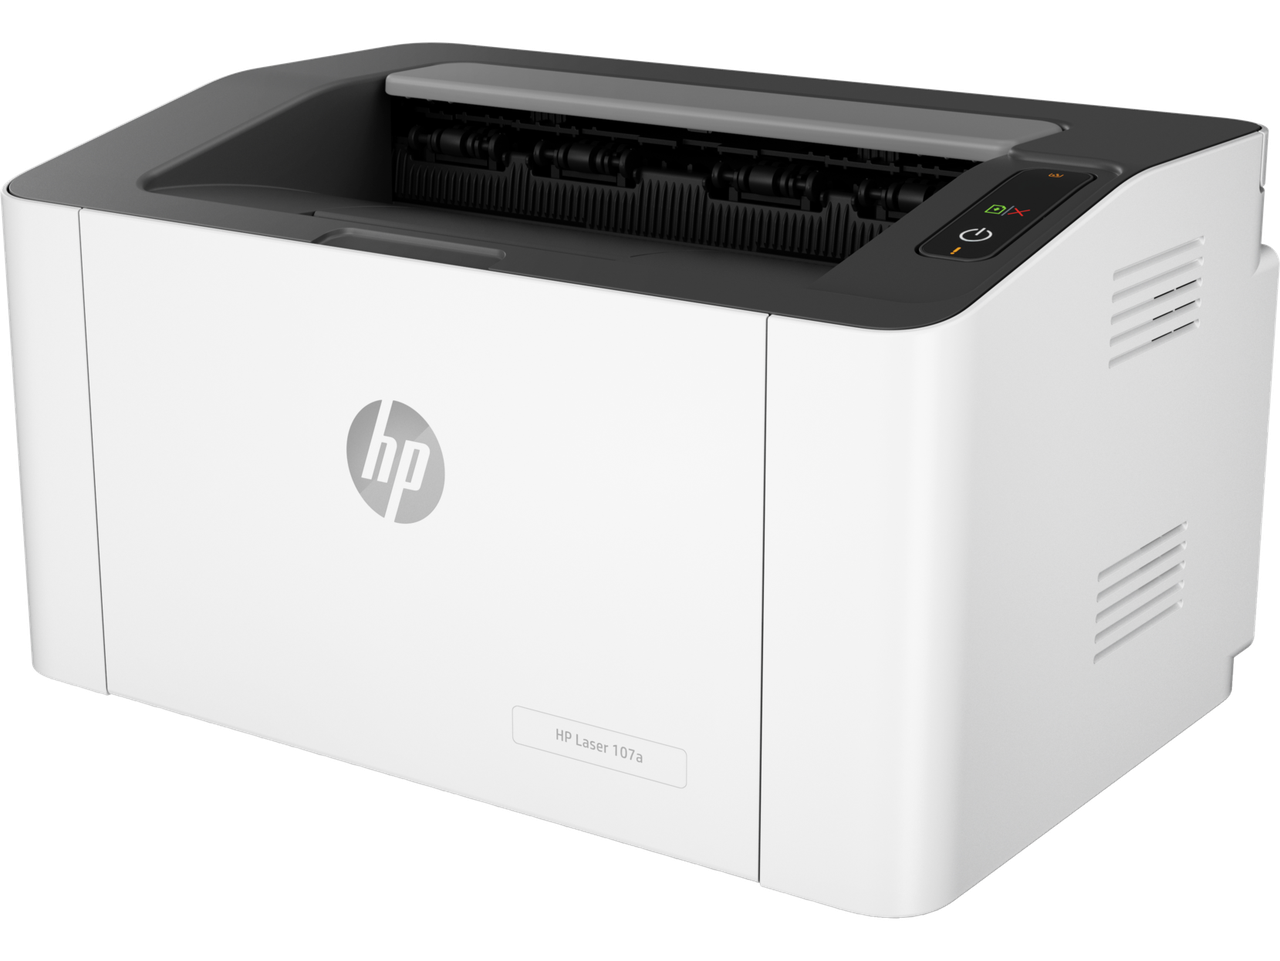 HP 4ZB77A Принтер лазерный черно-белый Laser 107a (A4) 1200 dpi, 20 ppm, 64 MB, 400 MHz, 150 pages tray, USB, фото 1